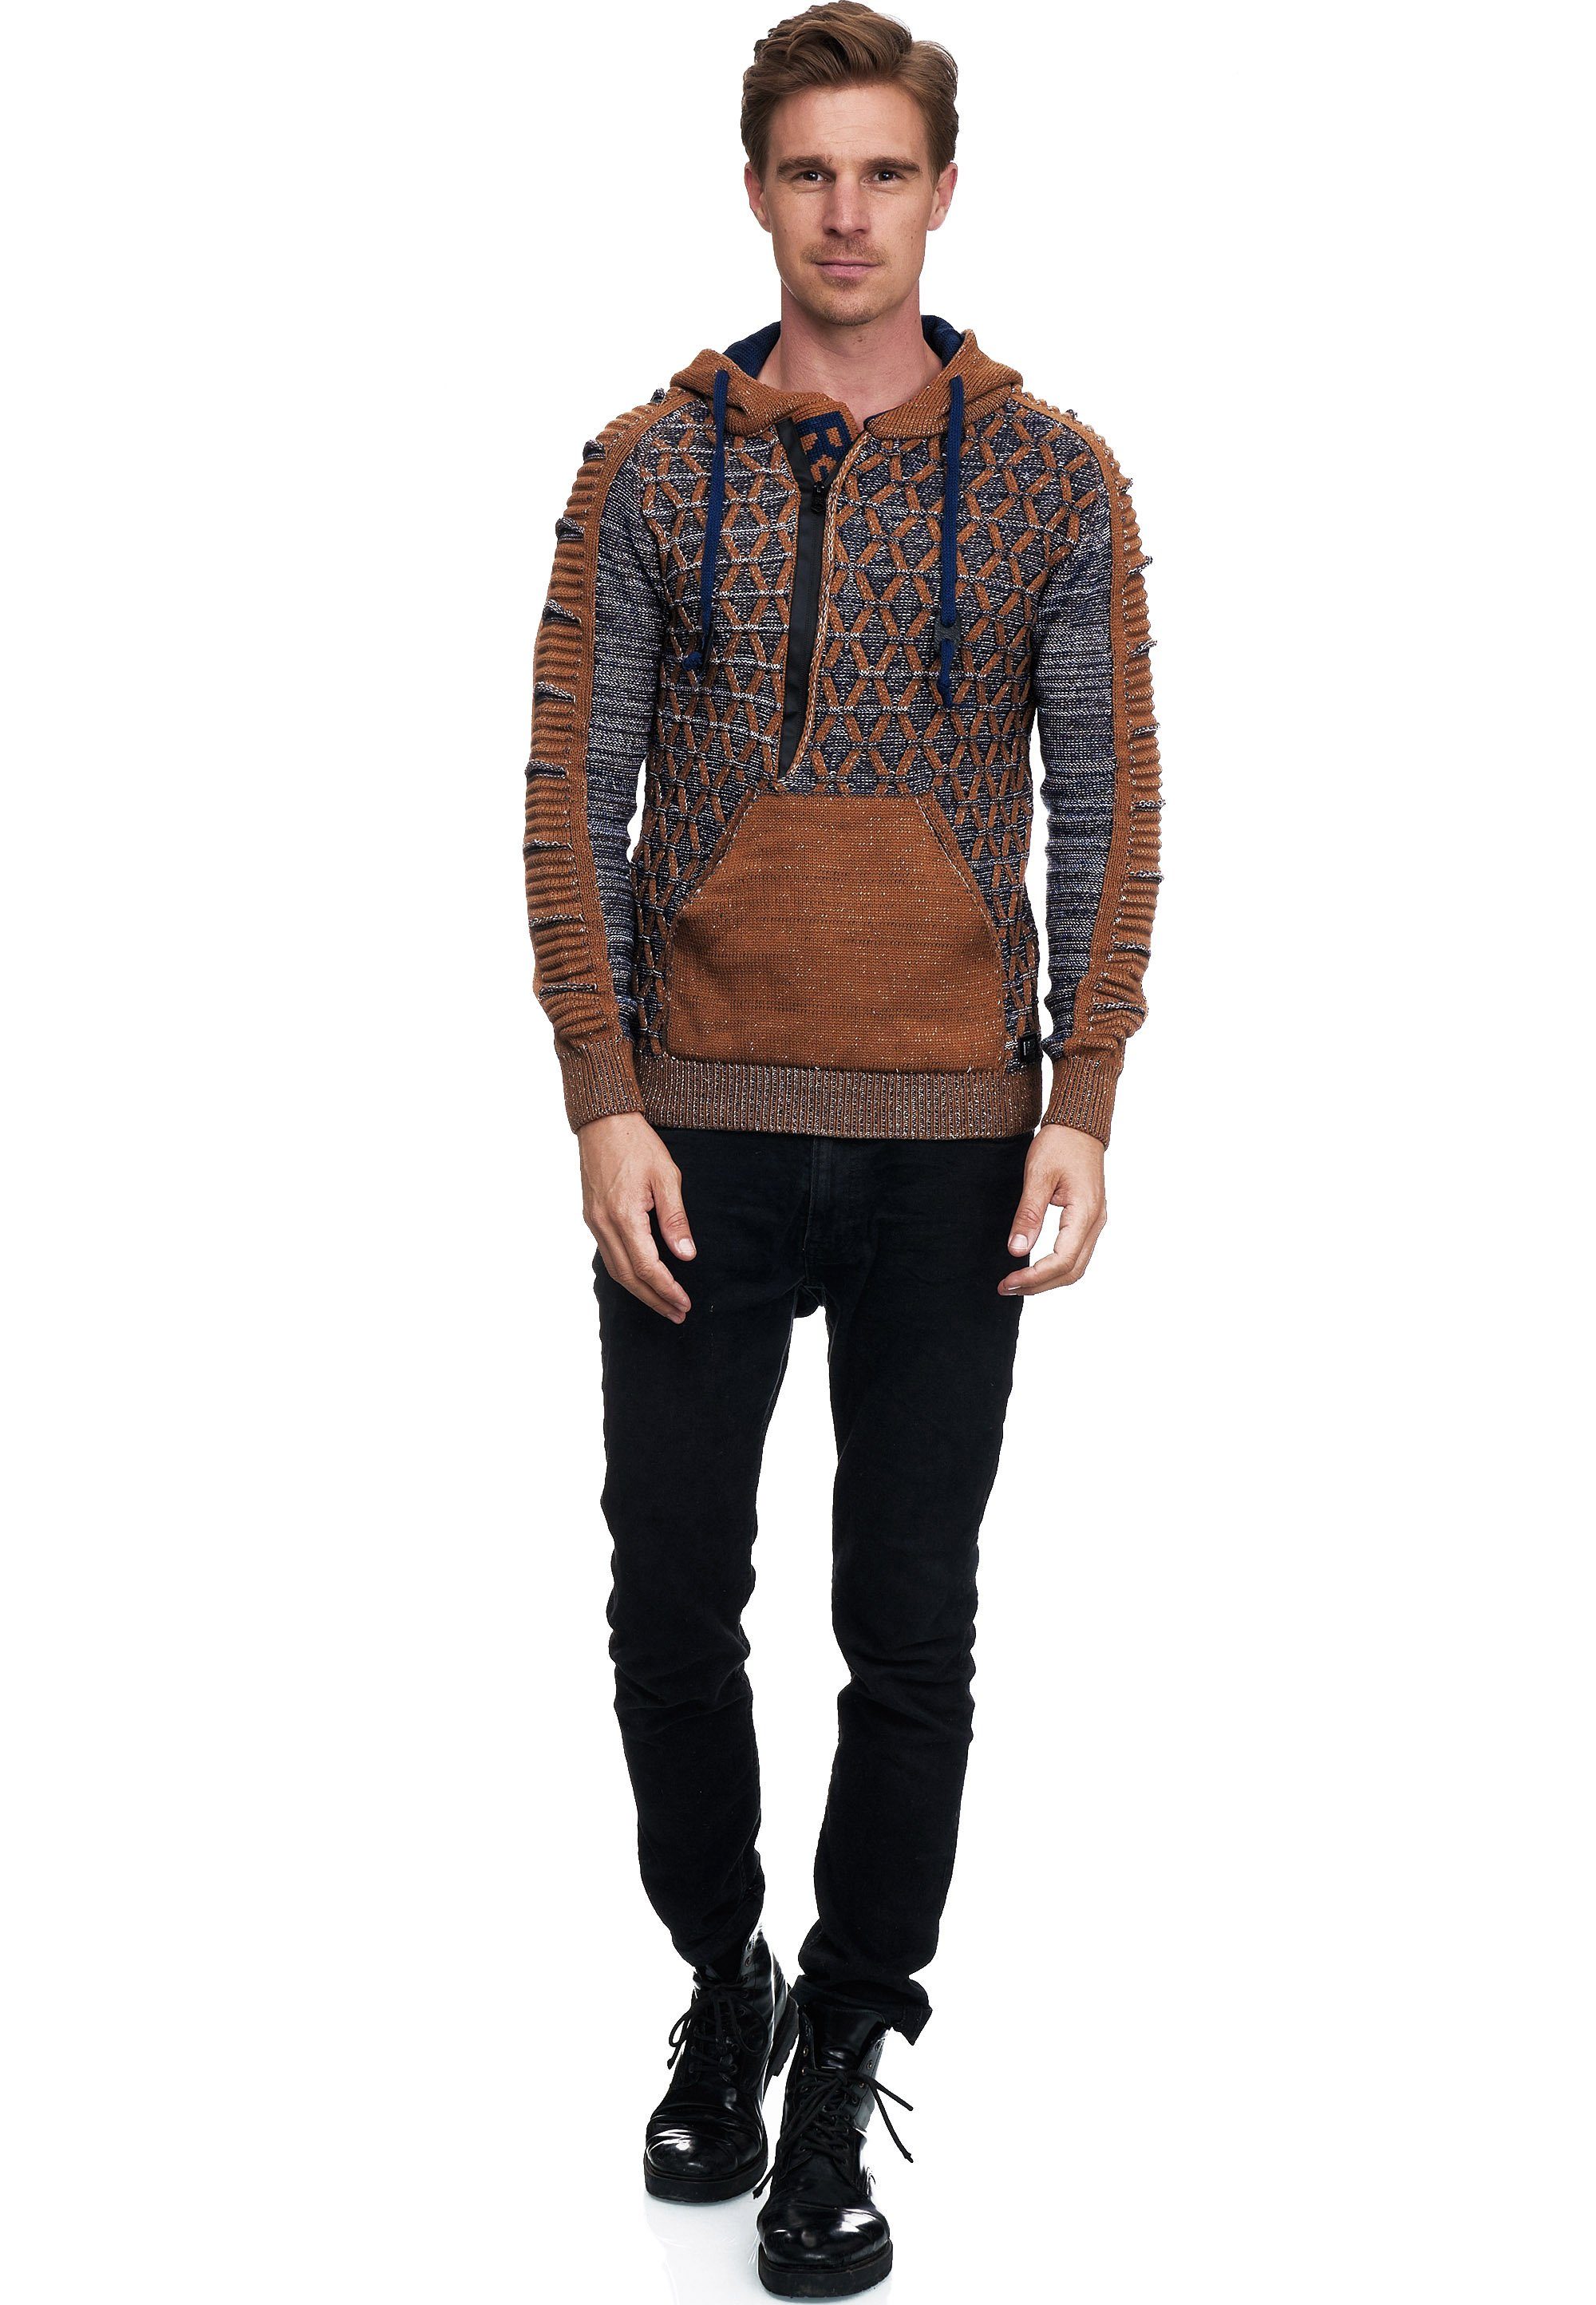 Rusty Neal Kapuzensweatshirt in ausgefallenem Design braun-grau | Sweatshirts